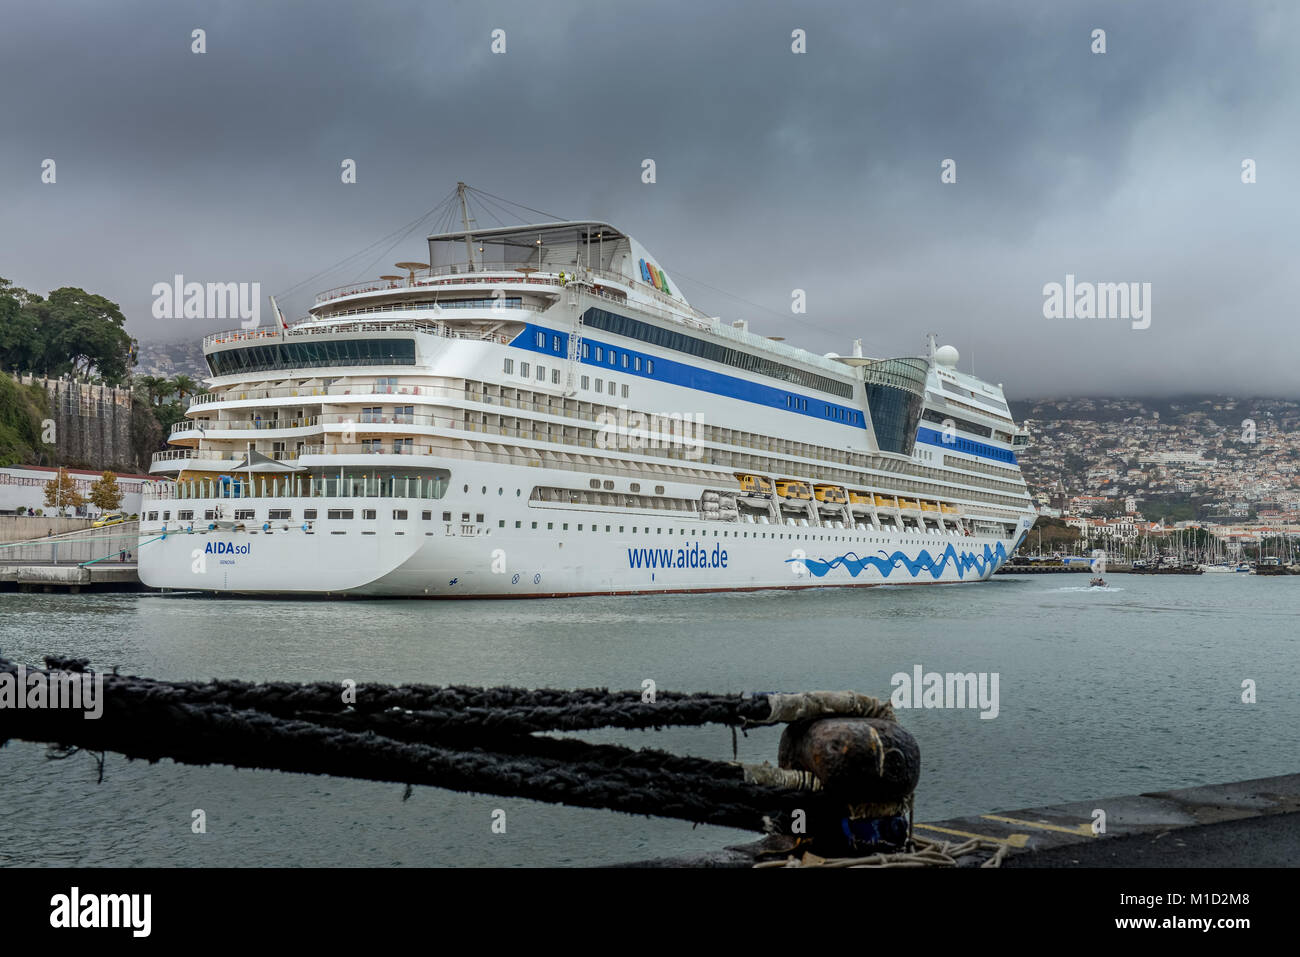 Cruise Ship Pier,' 'Aidasol, Funchal, Madeira, Portugal, Kreuzfahrtschiff ´Aidasol´, Schiffsanleger Stock Photo